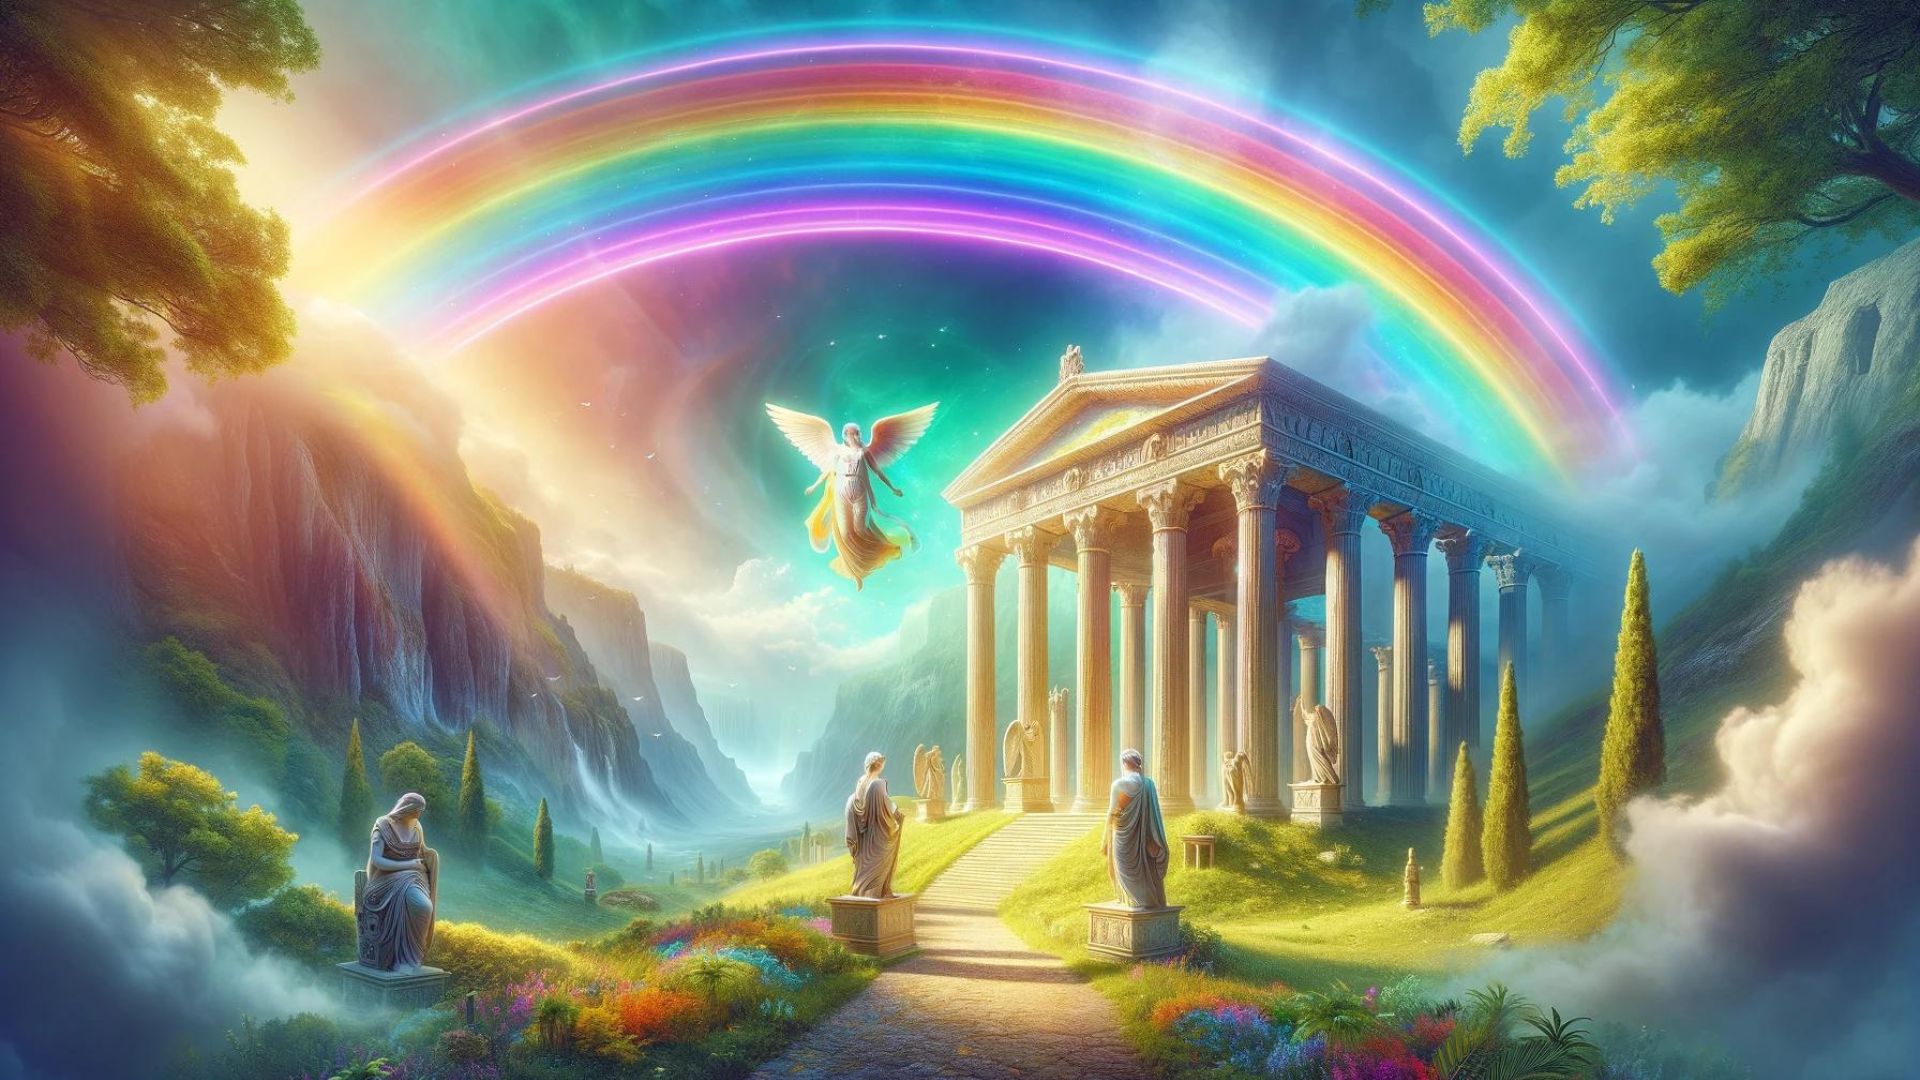 Rainbows according to ancient Greeks